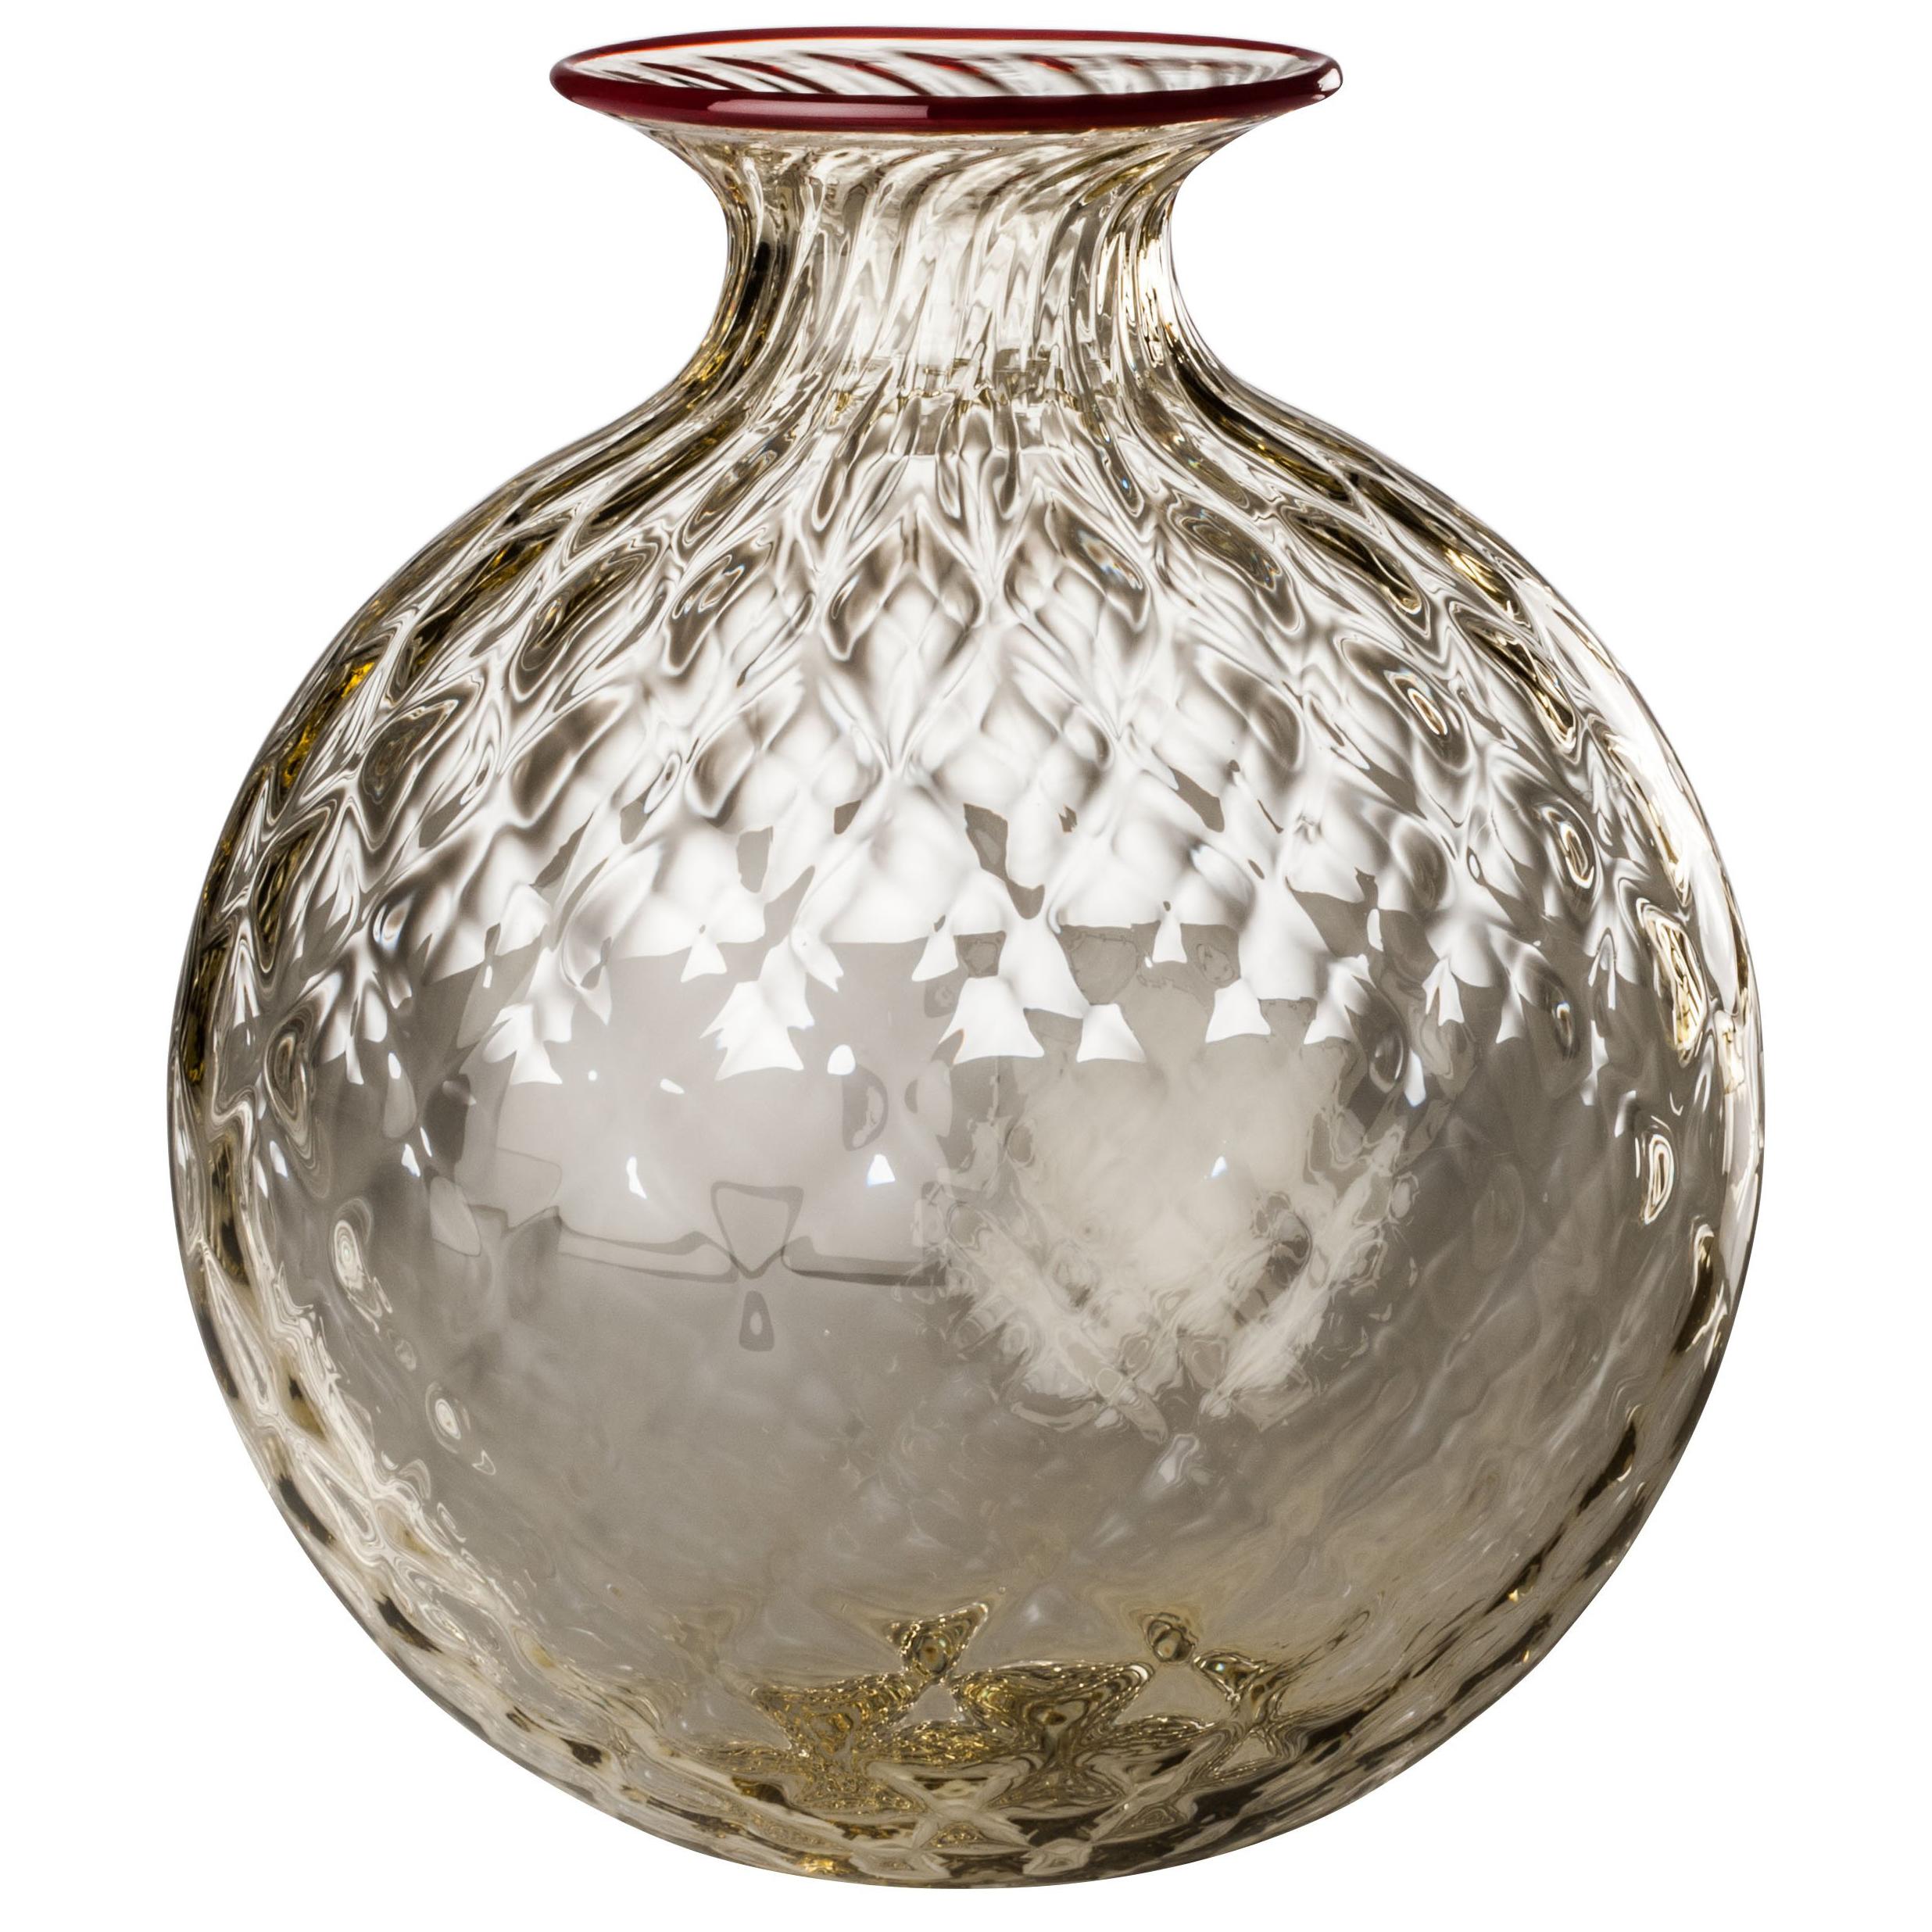 Monofiore Balaton Glass Vase in Pale Straw with Red Thread Rim by Venini